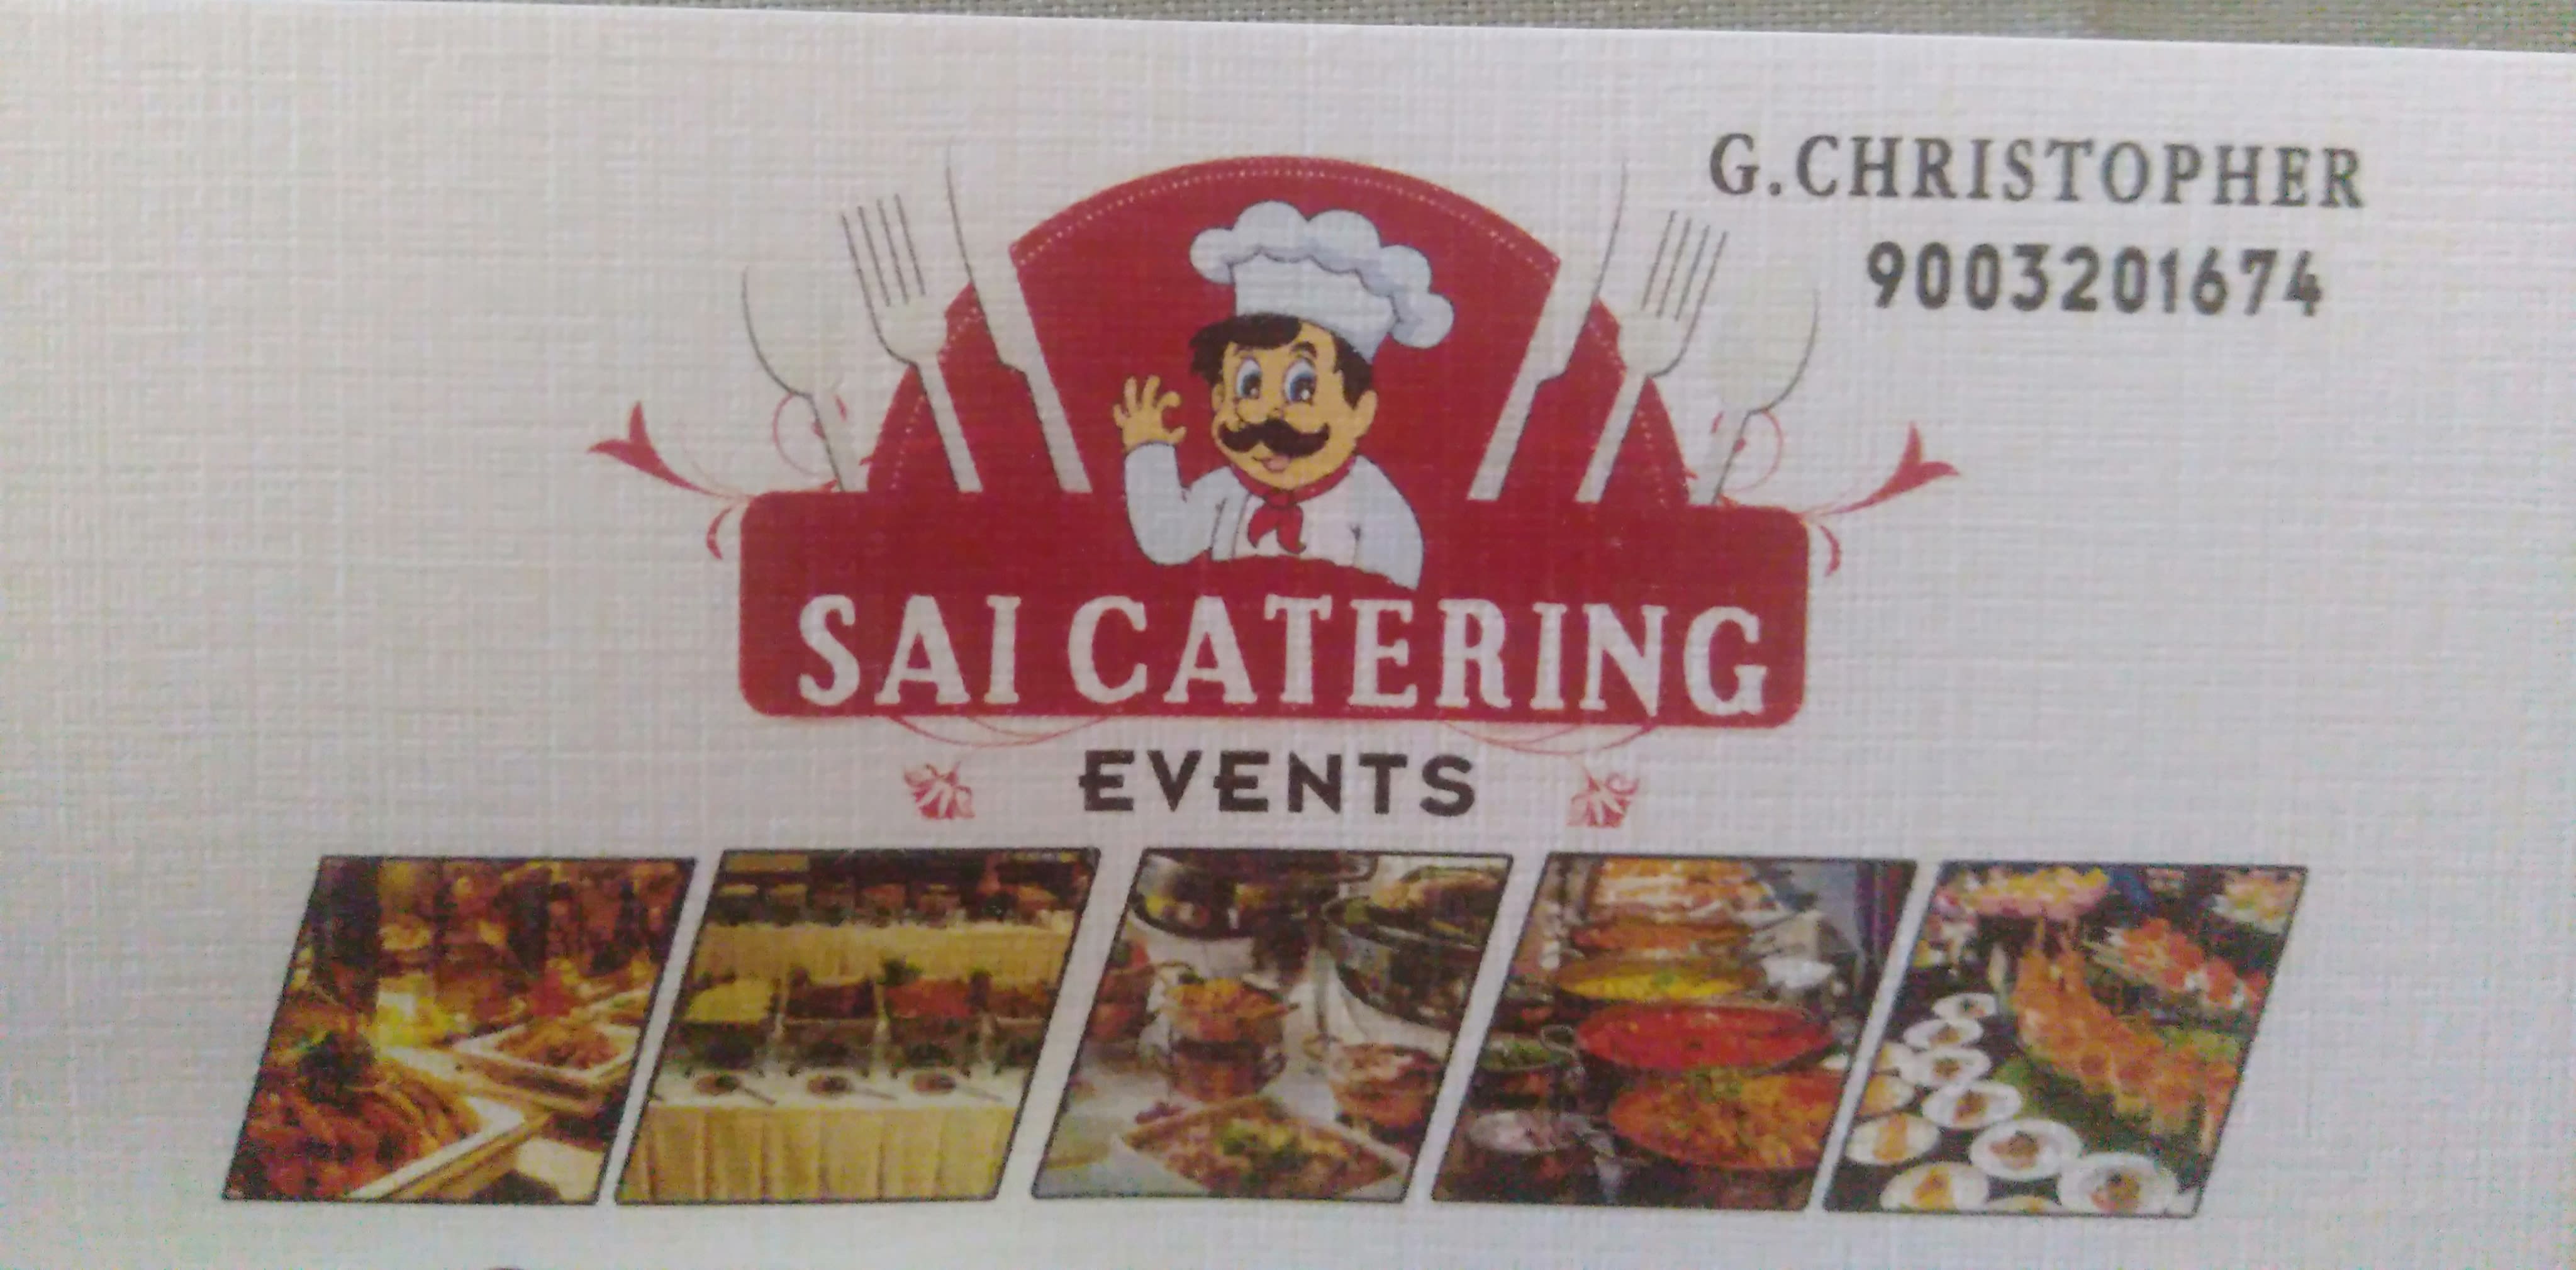 Sai Catering